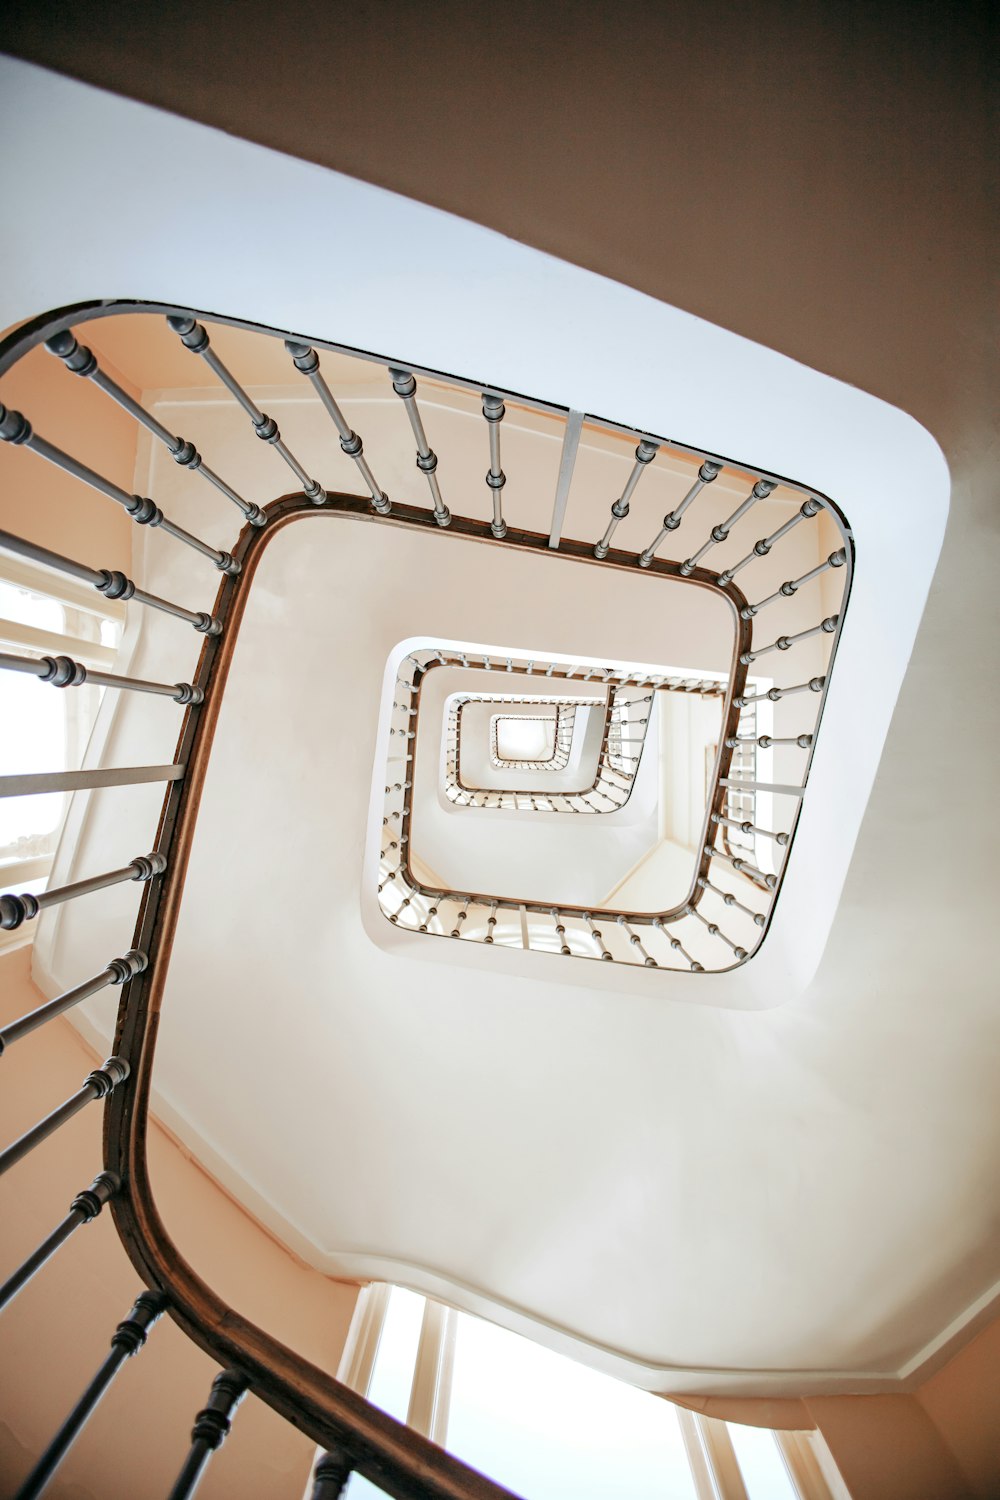 a spiral staircase with a circular light